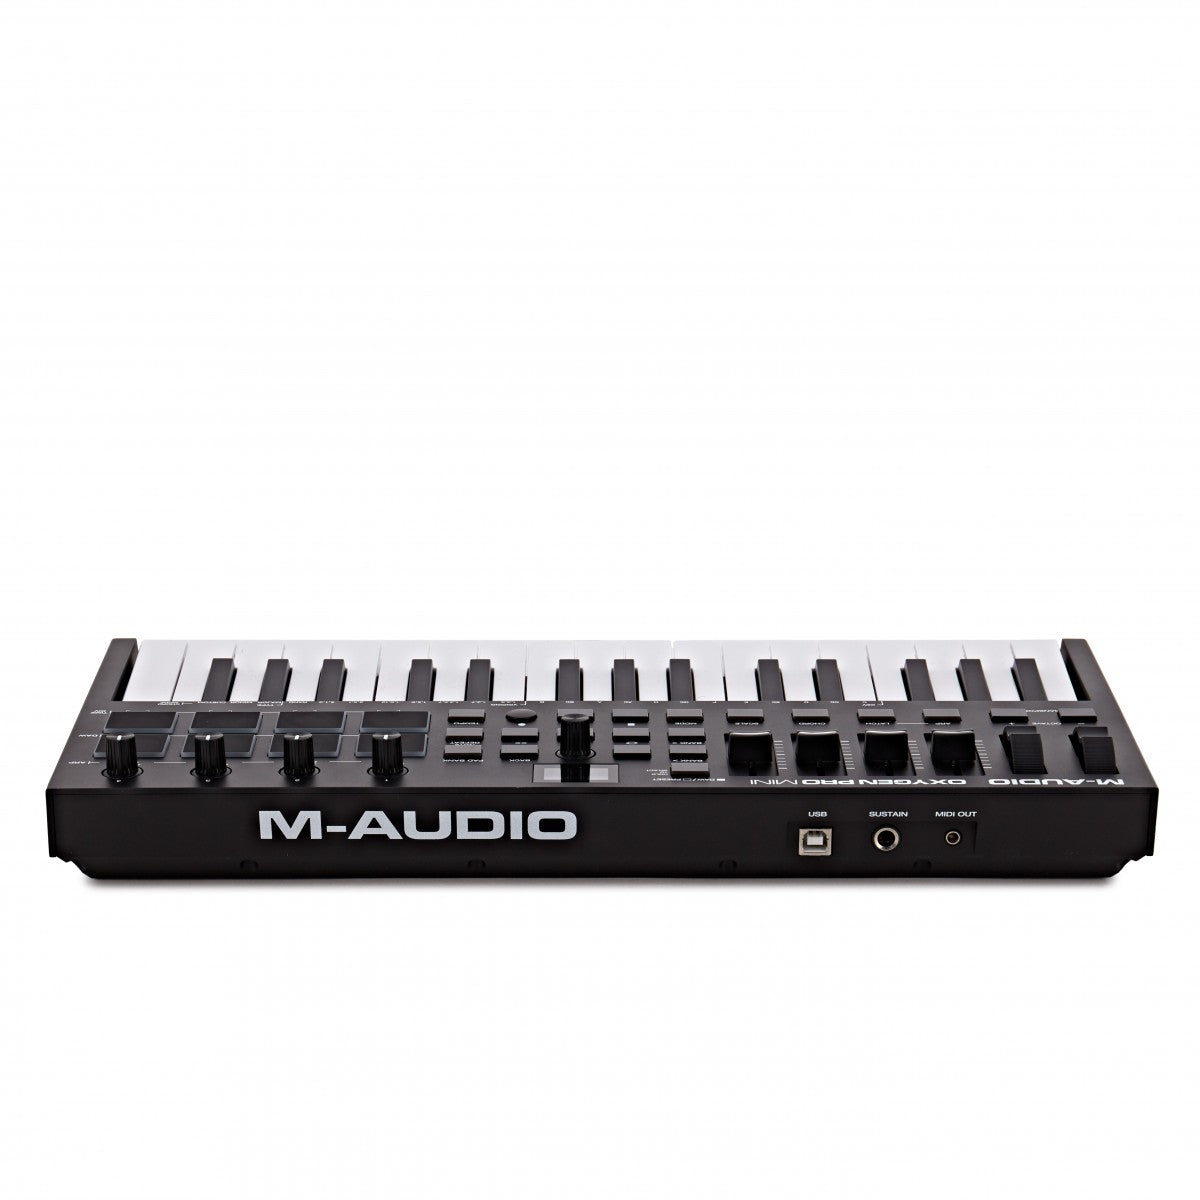 MIDI Keyboard Controller M-Audio Oxygen Pro Mini